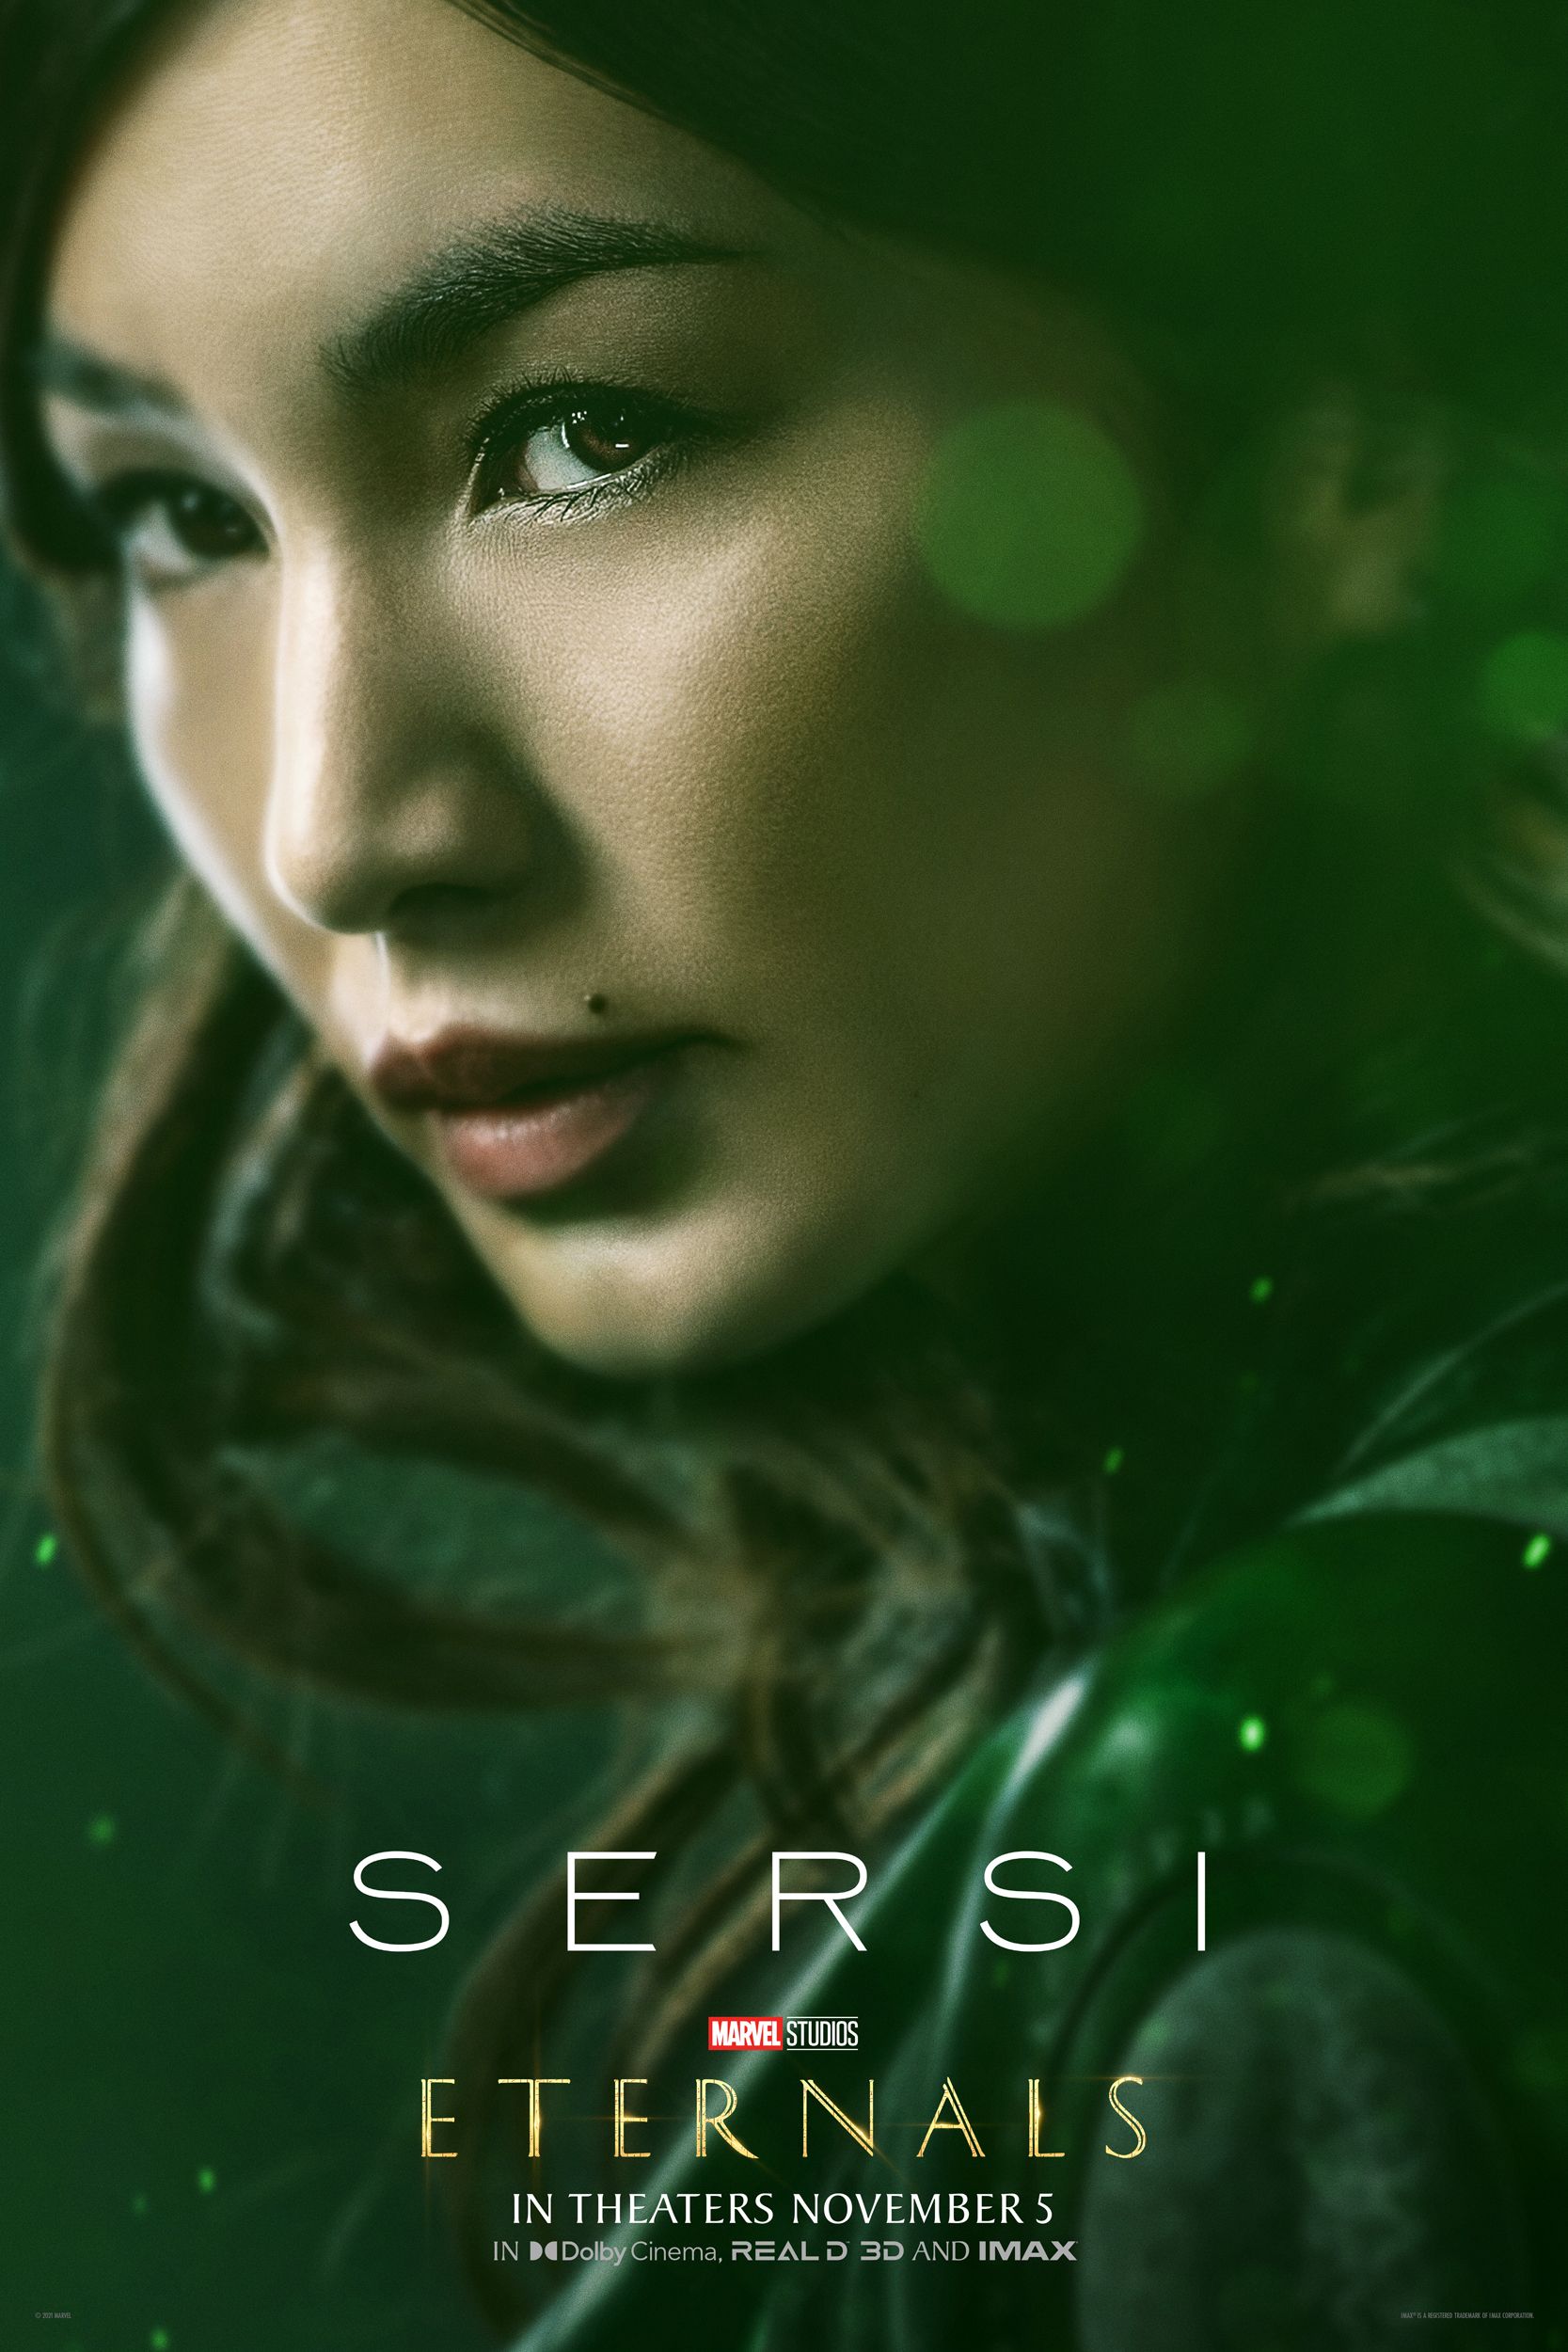 Eternals poster 1 - Sersi